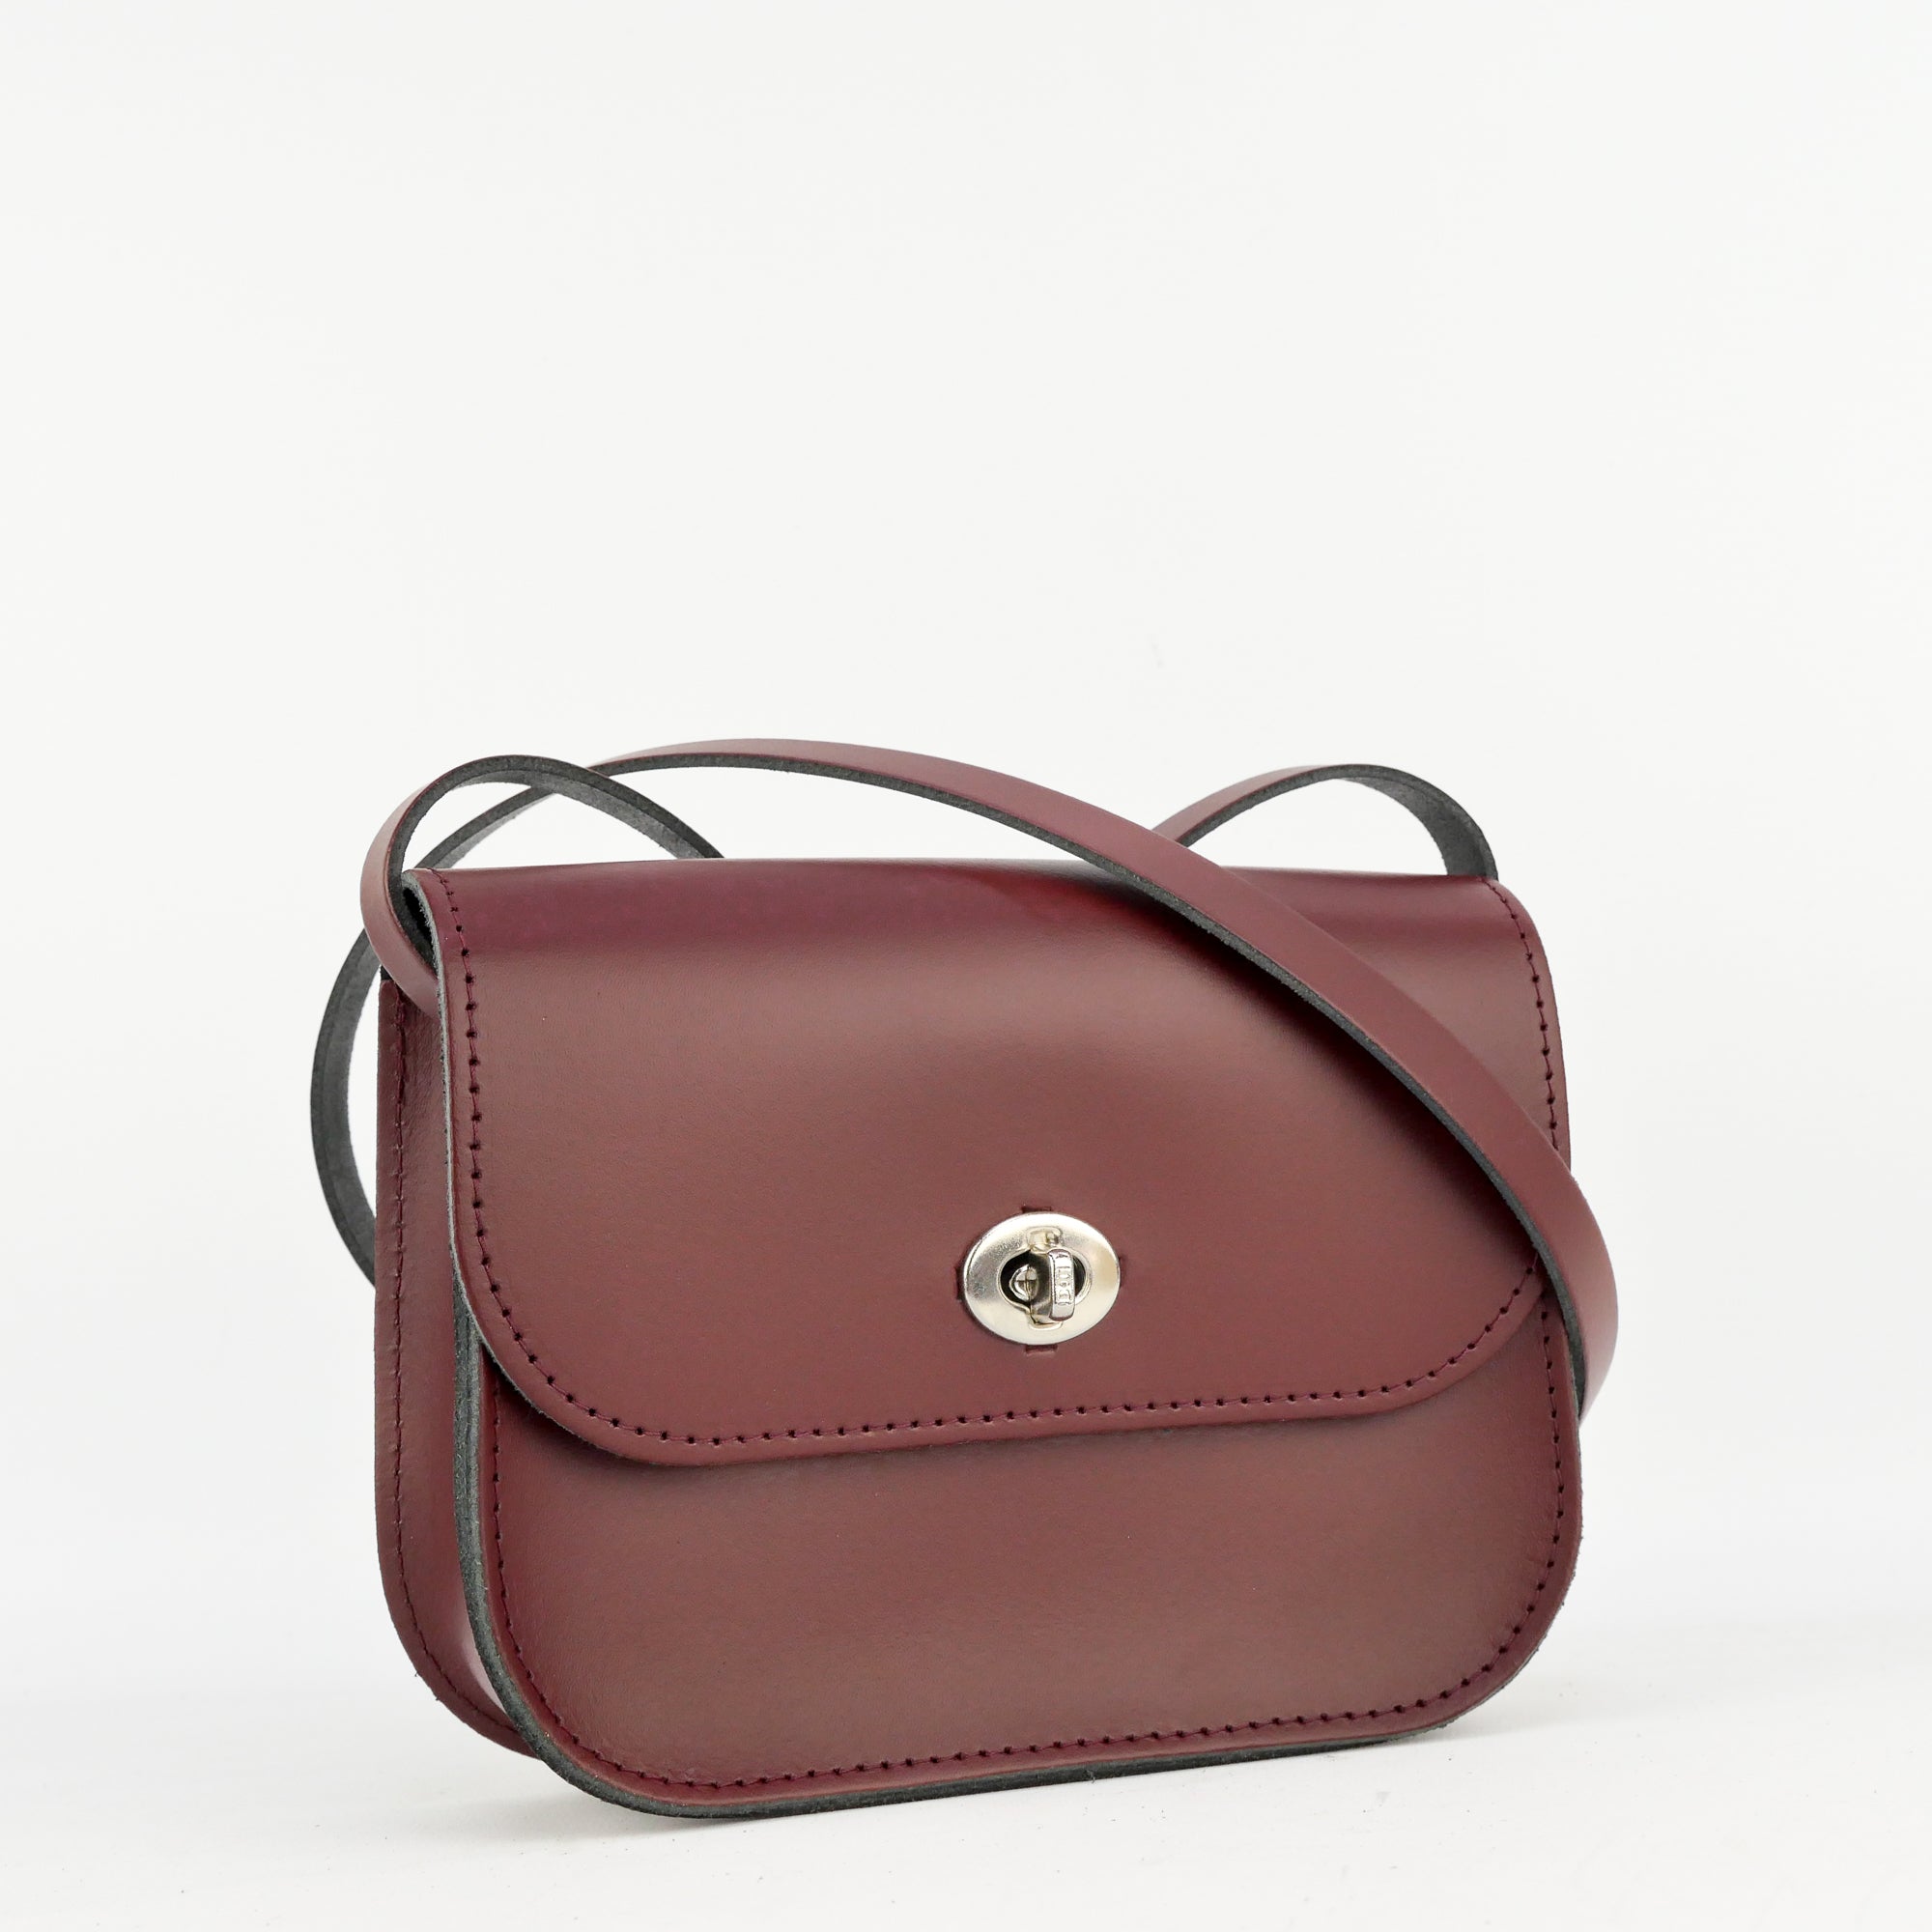 Burgundy Leather Handbag | Handmade Leather Satchel | Cross Body Bag